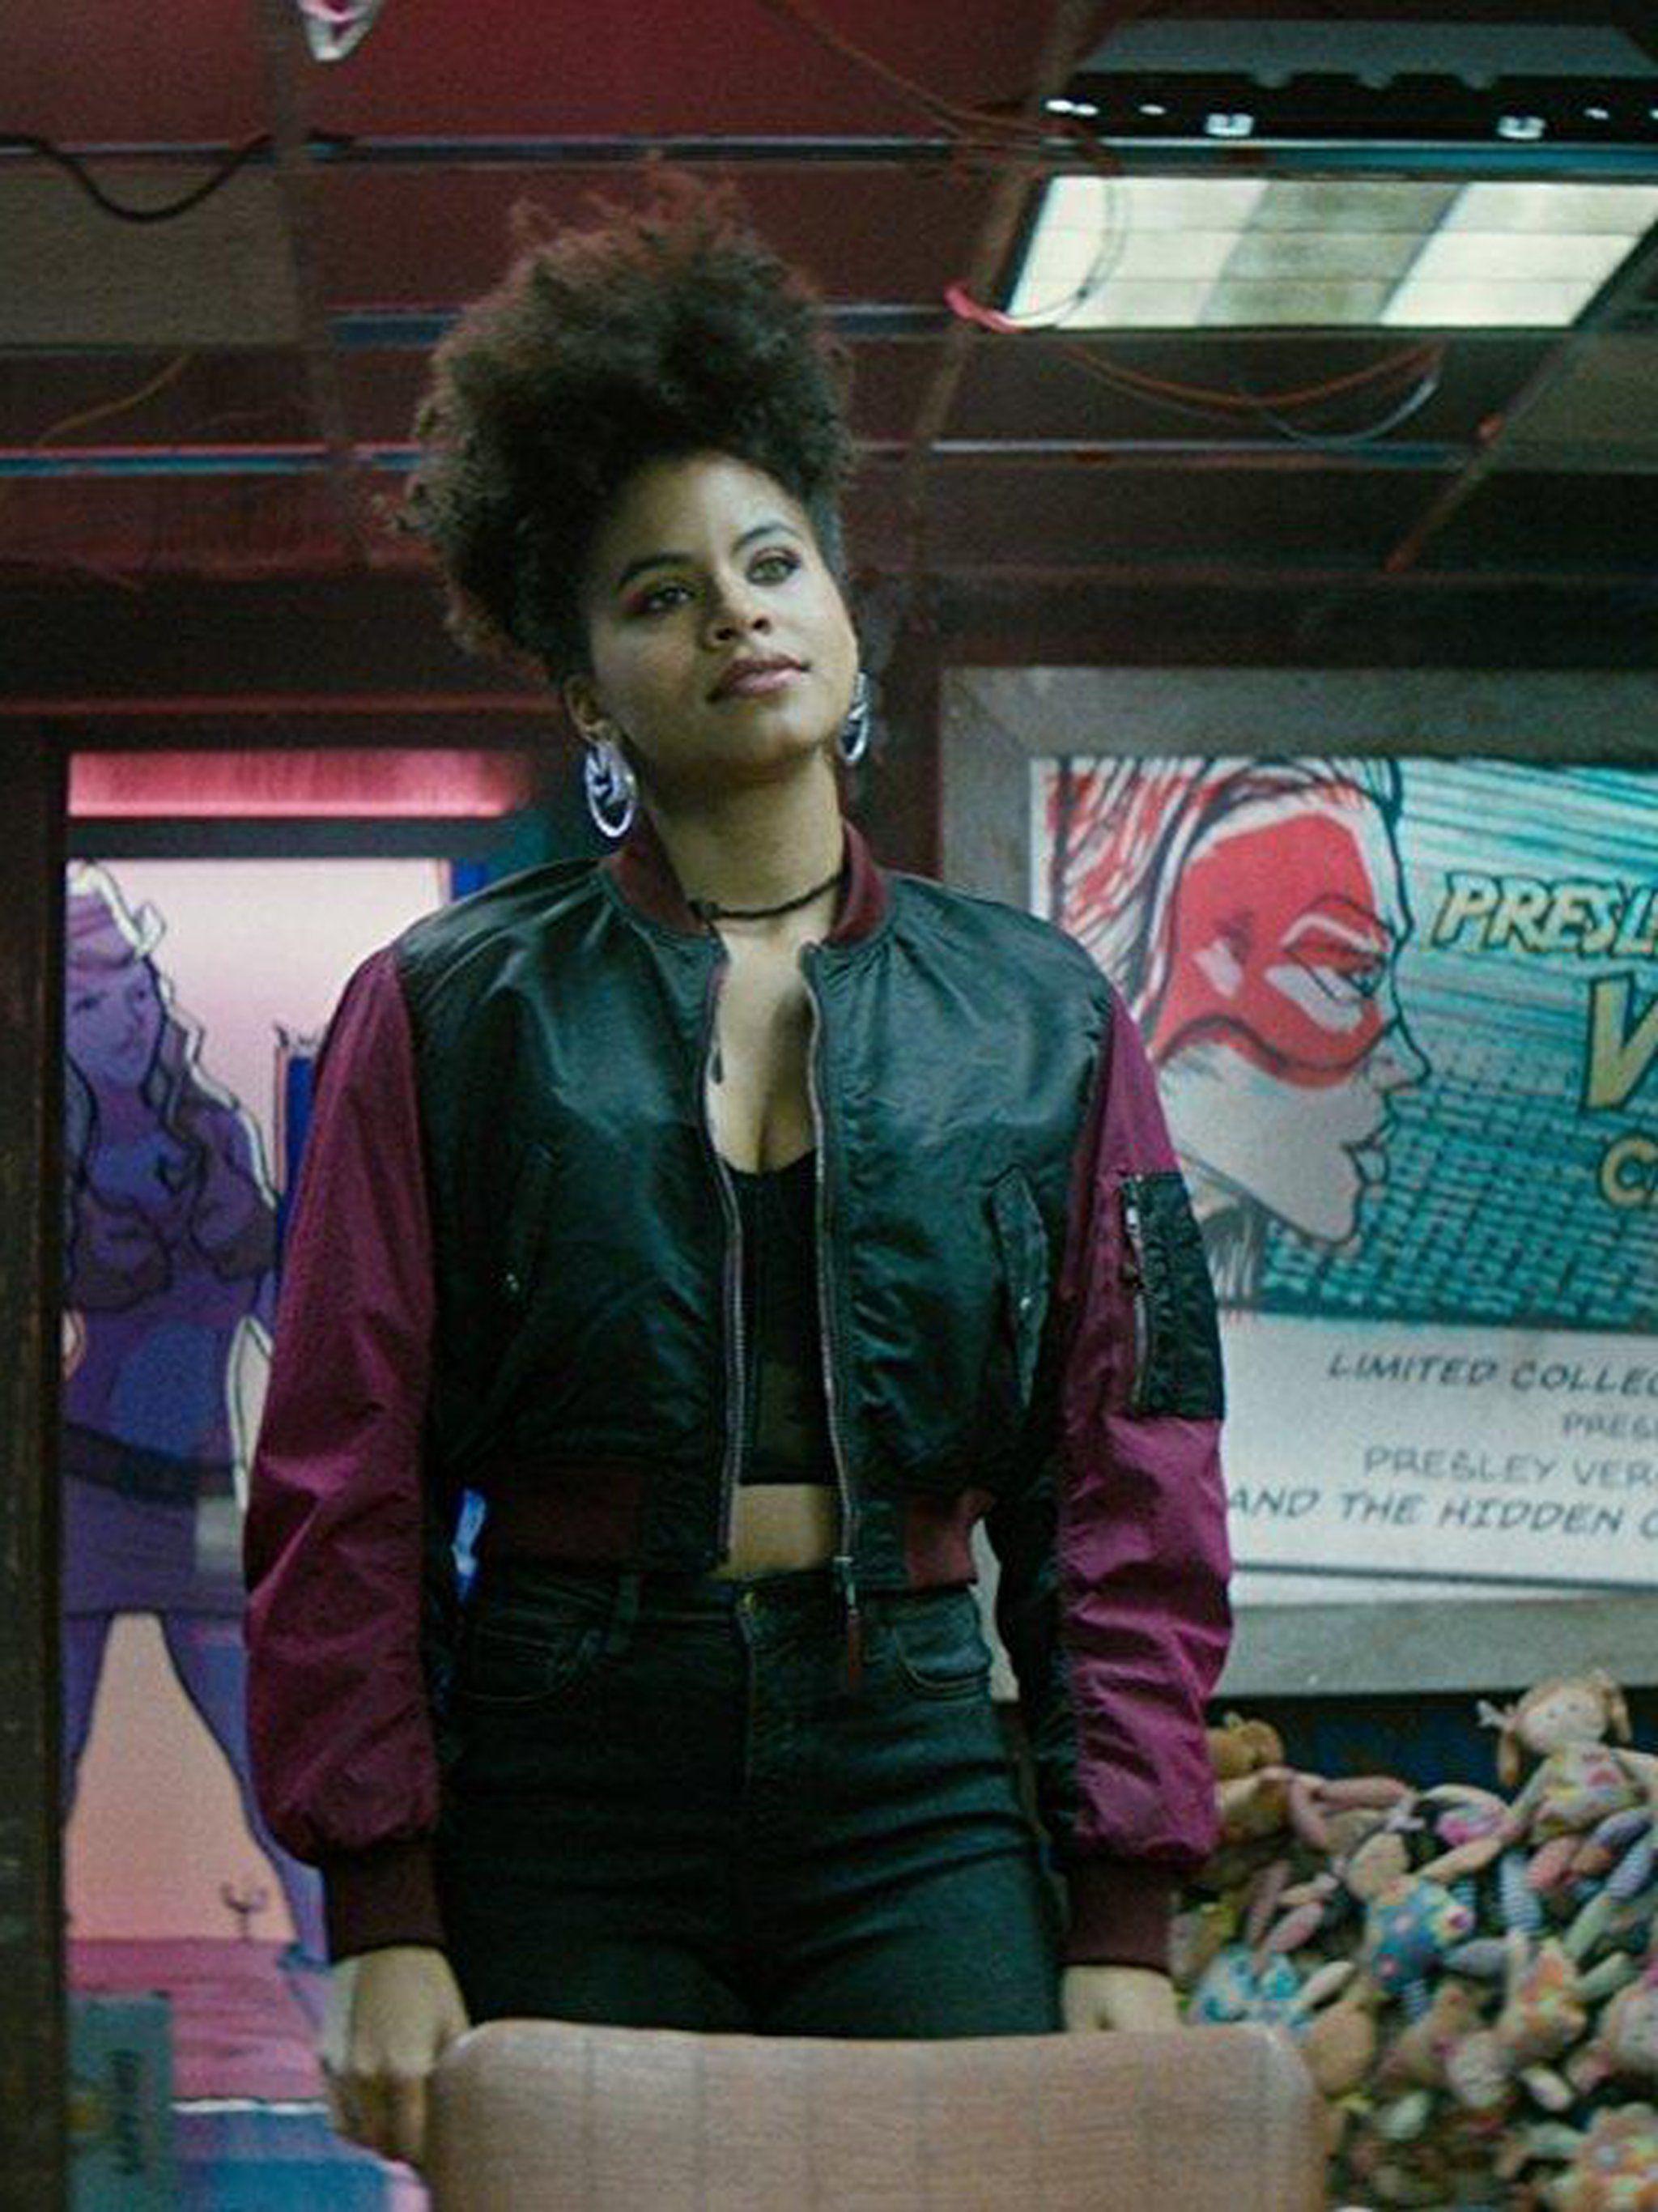 Zazie Beetz As Domino In Deadpool 2 Wallpapers